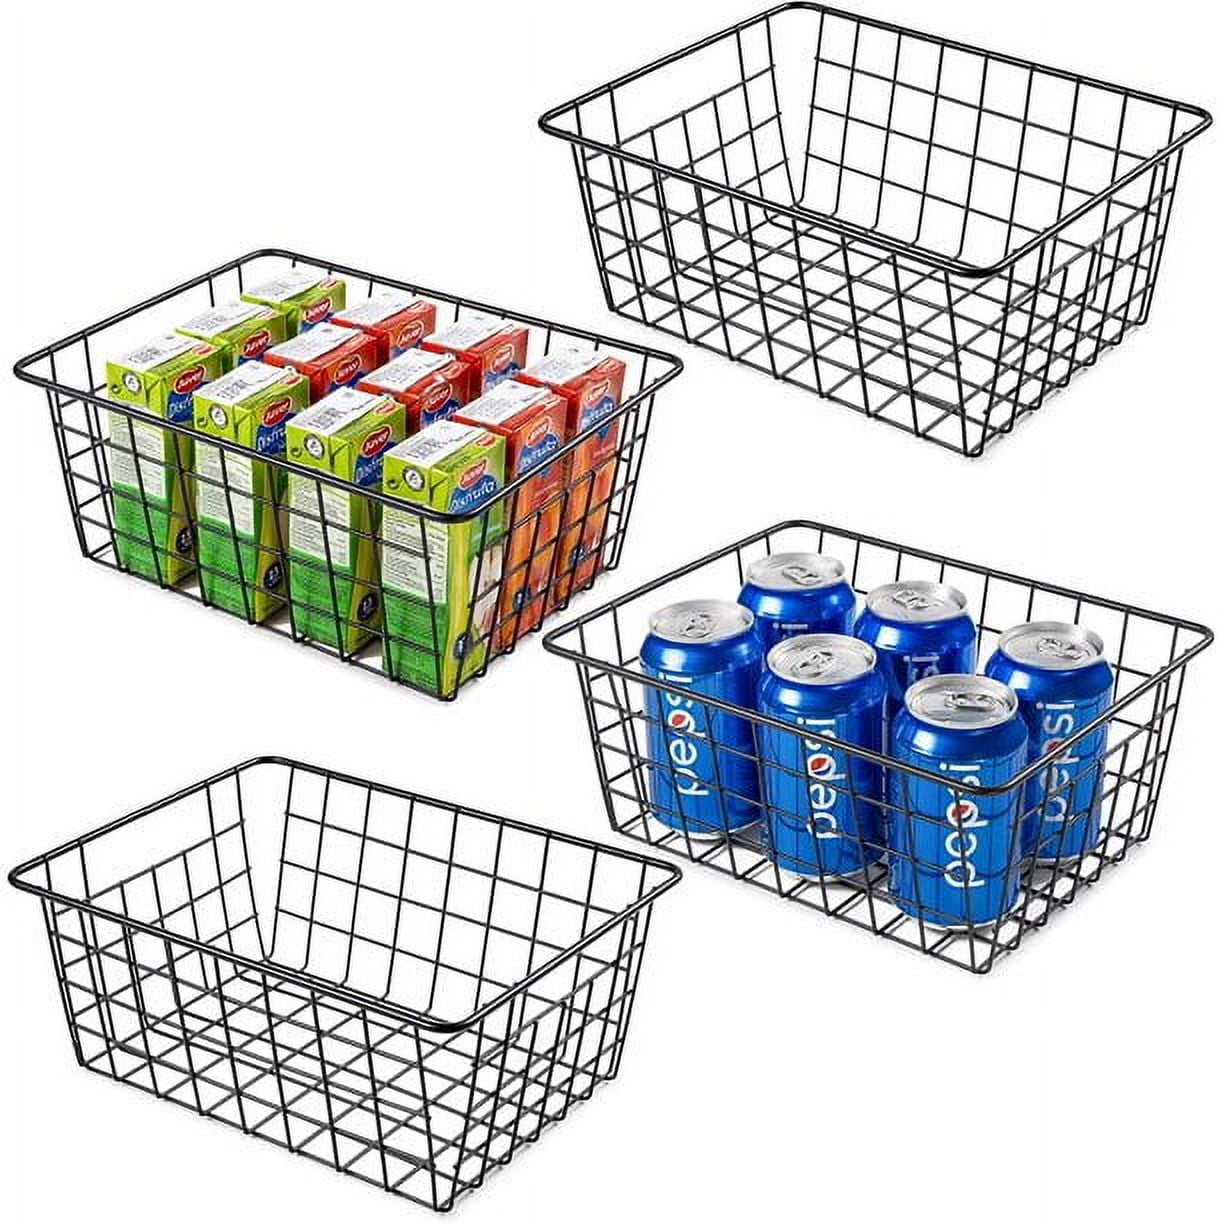 Sorbus Metal Wire Storage Baskets, Kitchen Pantry Organizer - Storage Bins for Home, Bathroom, Laundry Room, Closet Organization (4-Pack, White)